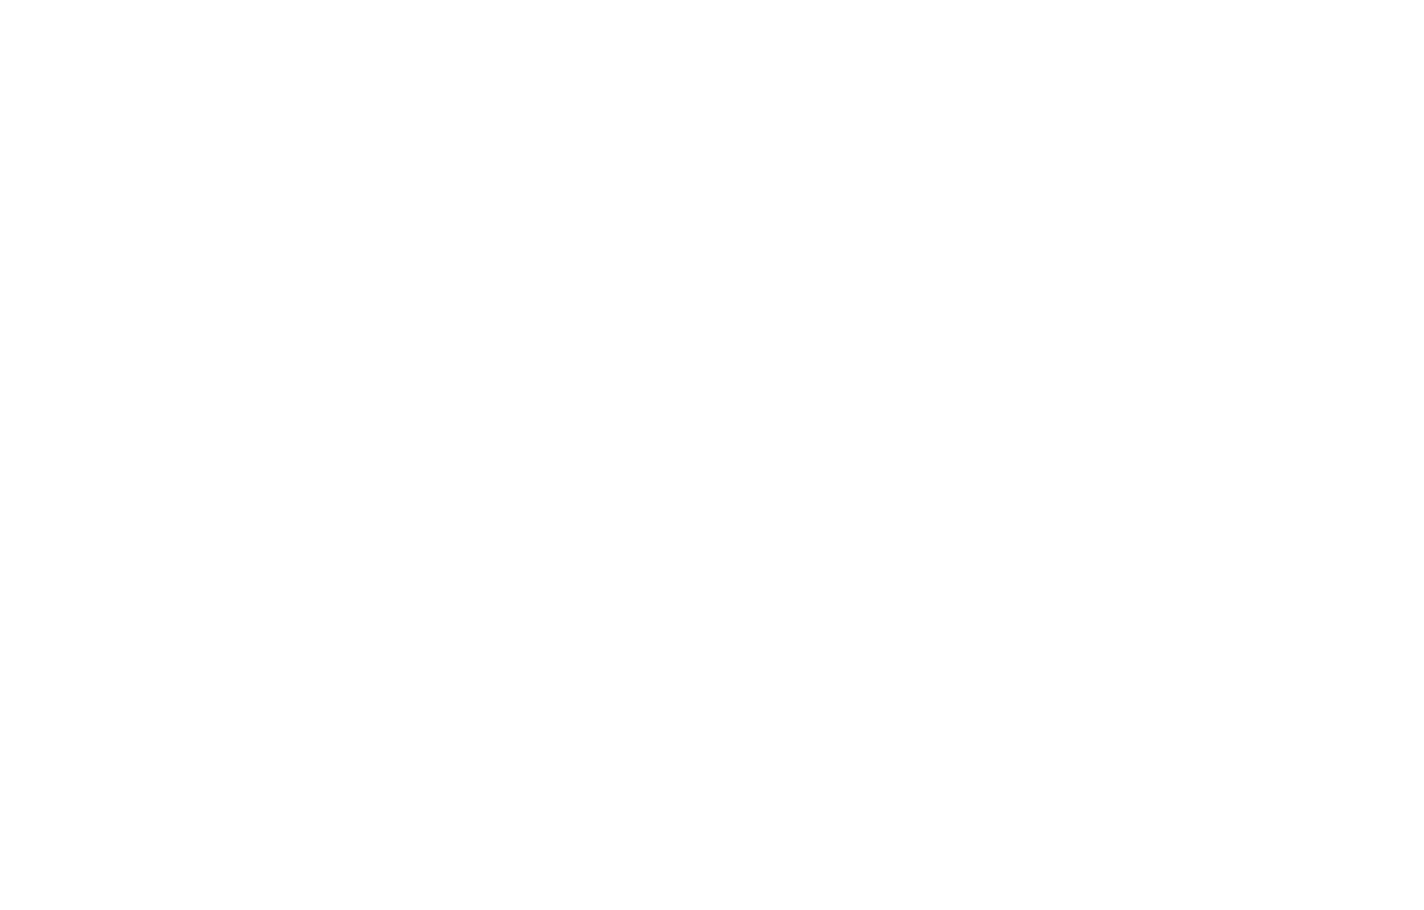 S.K.V. Hercules Logo